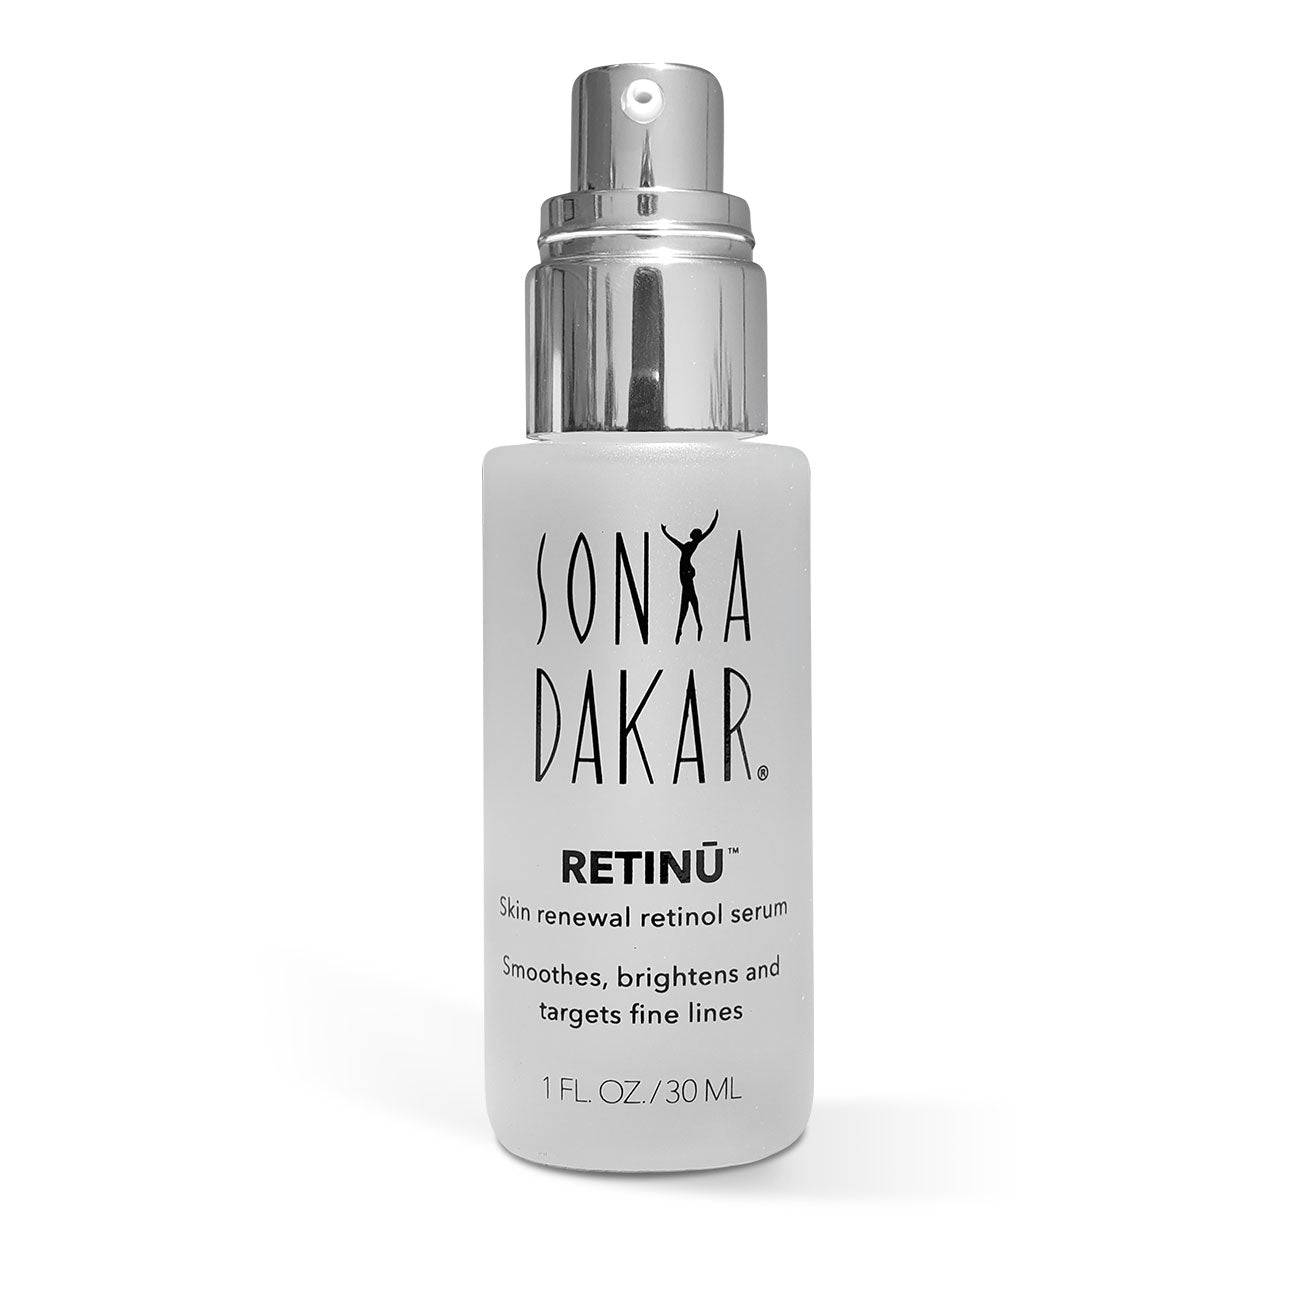 Anti-aging gentle retinol serum